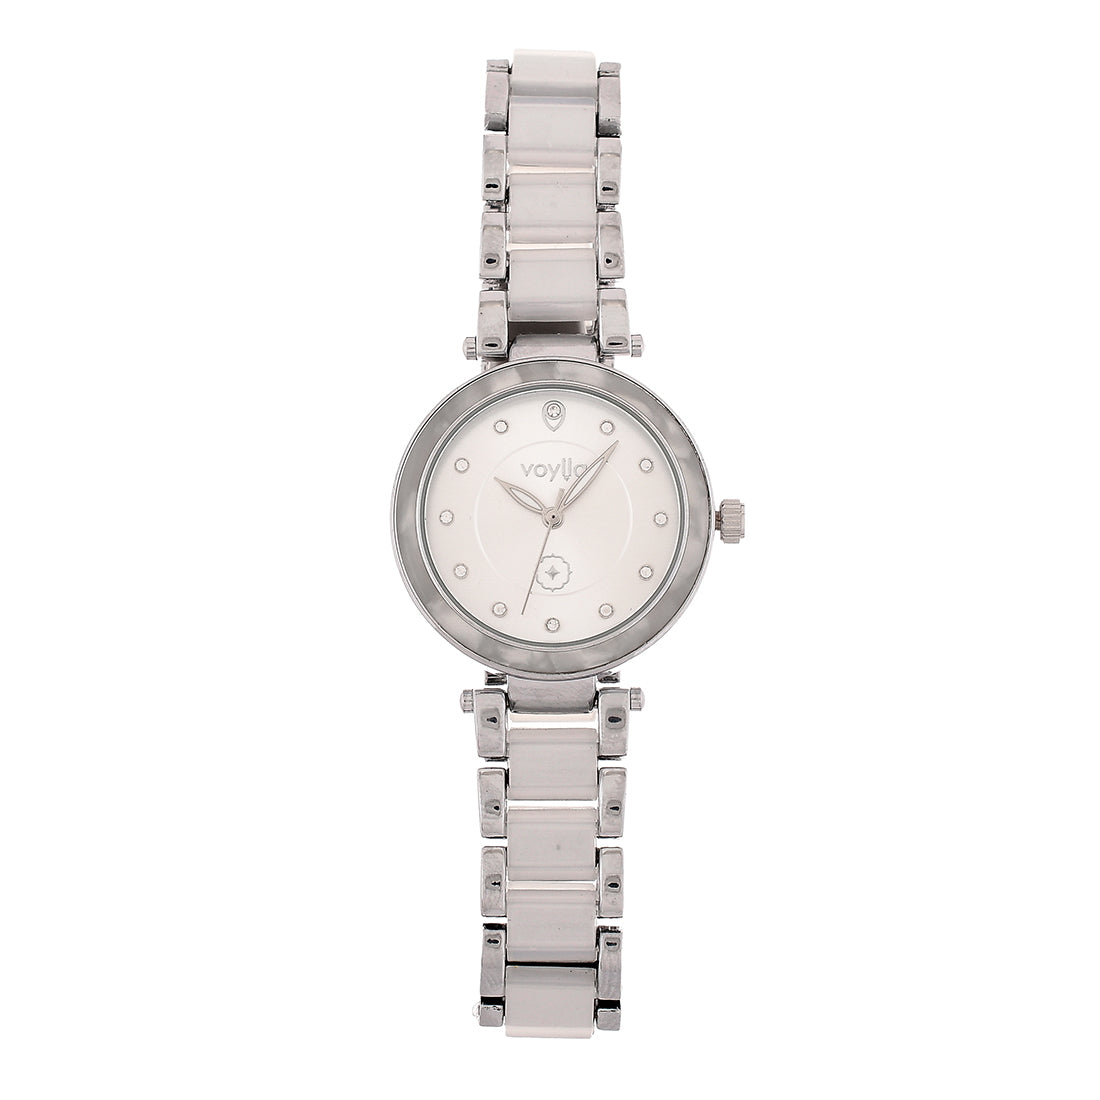 Voylla White Rhodium Plated Fashion Watch - Voylla